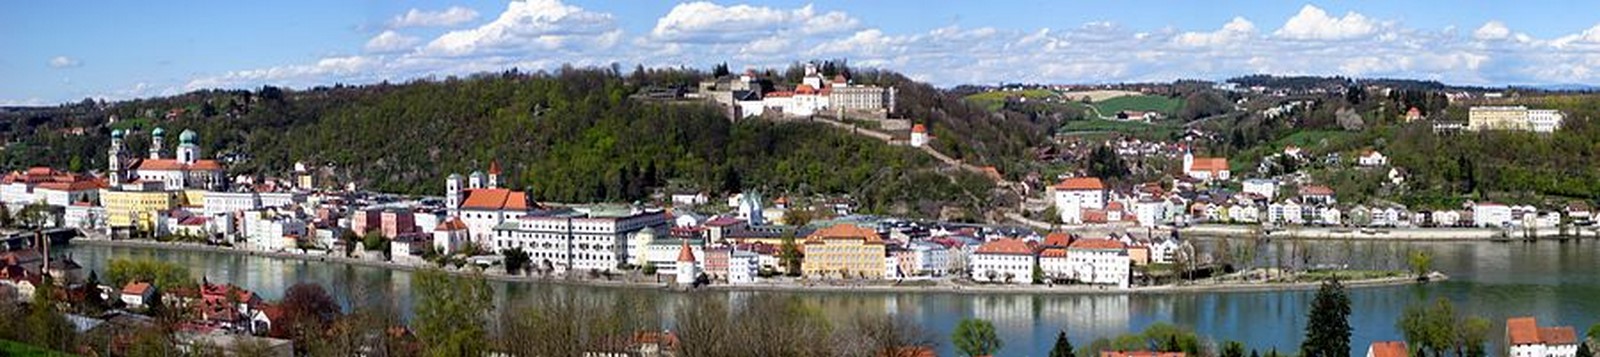 Passau and the Danube - Sheet2